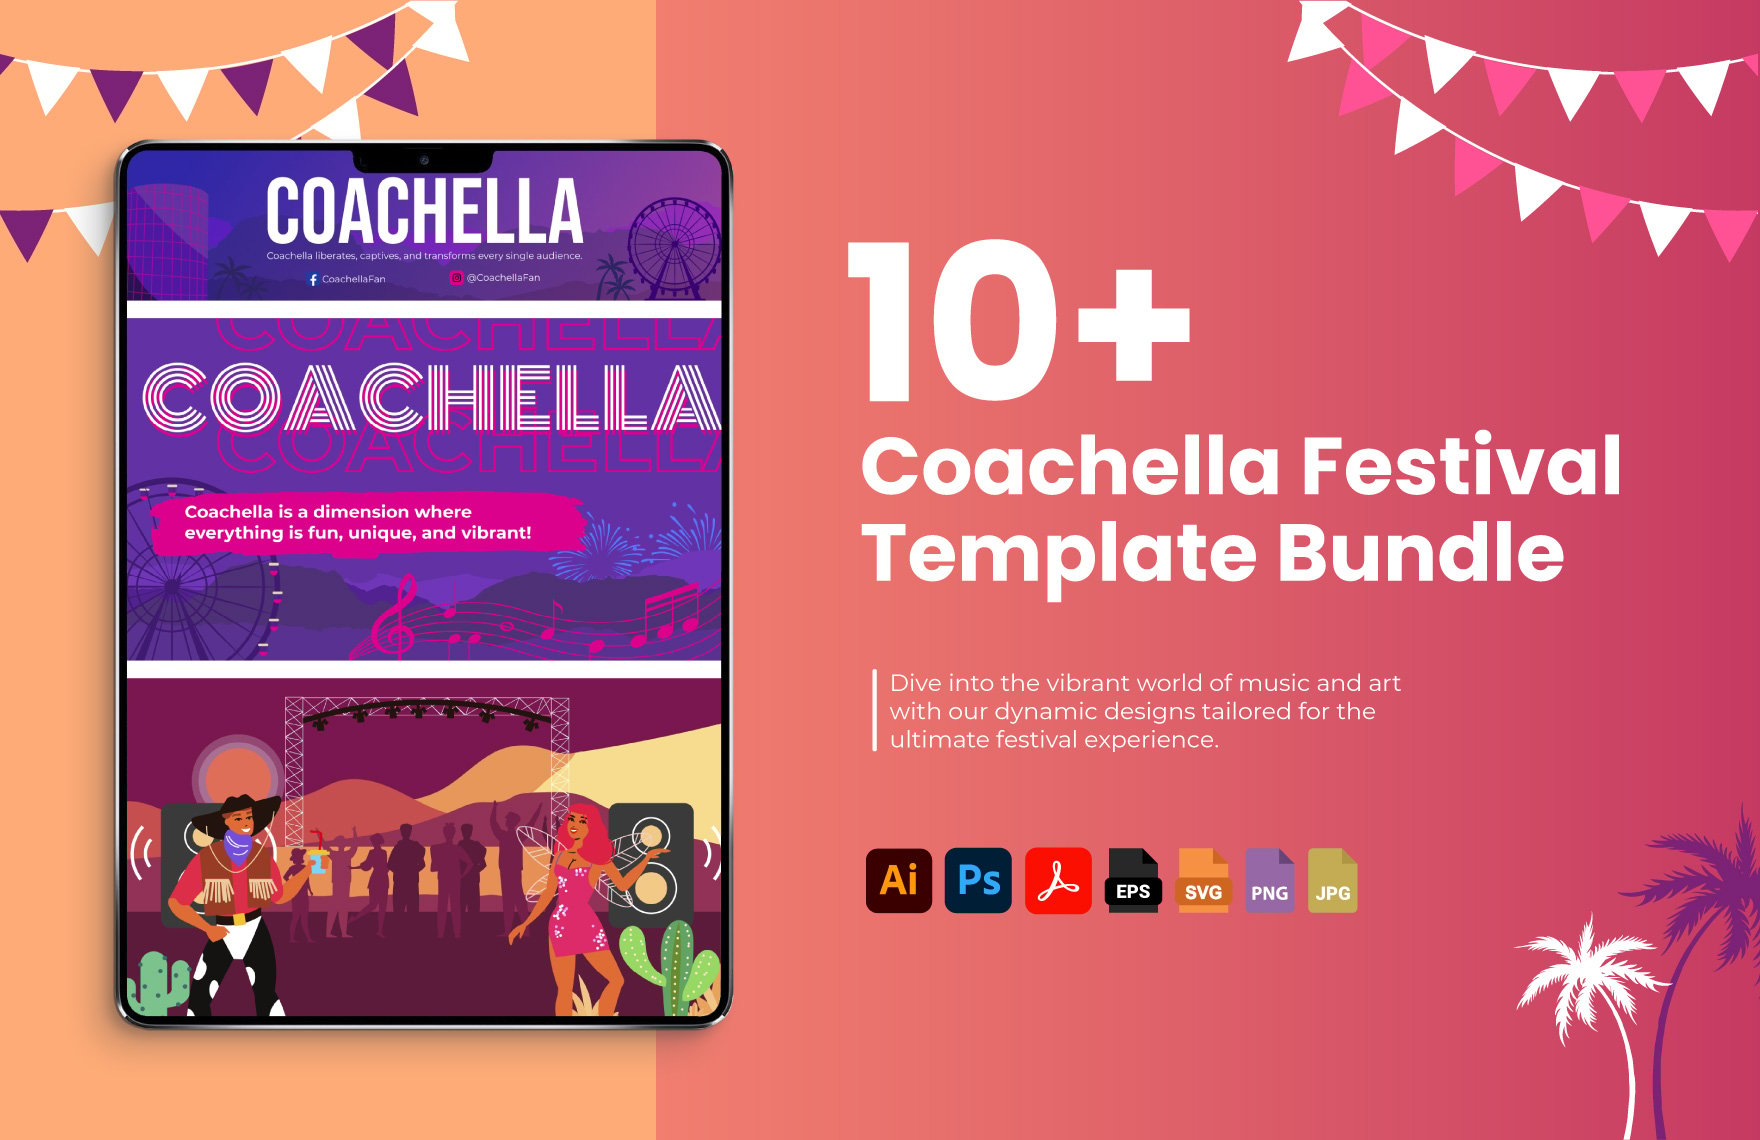 Free 10+ Coachella Festival Template Bundle in PDF, Illustrator, PSD, EPS, SVG, JPG, PNG